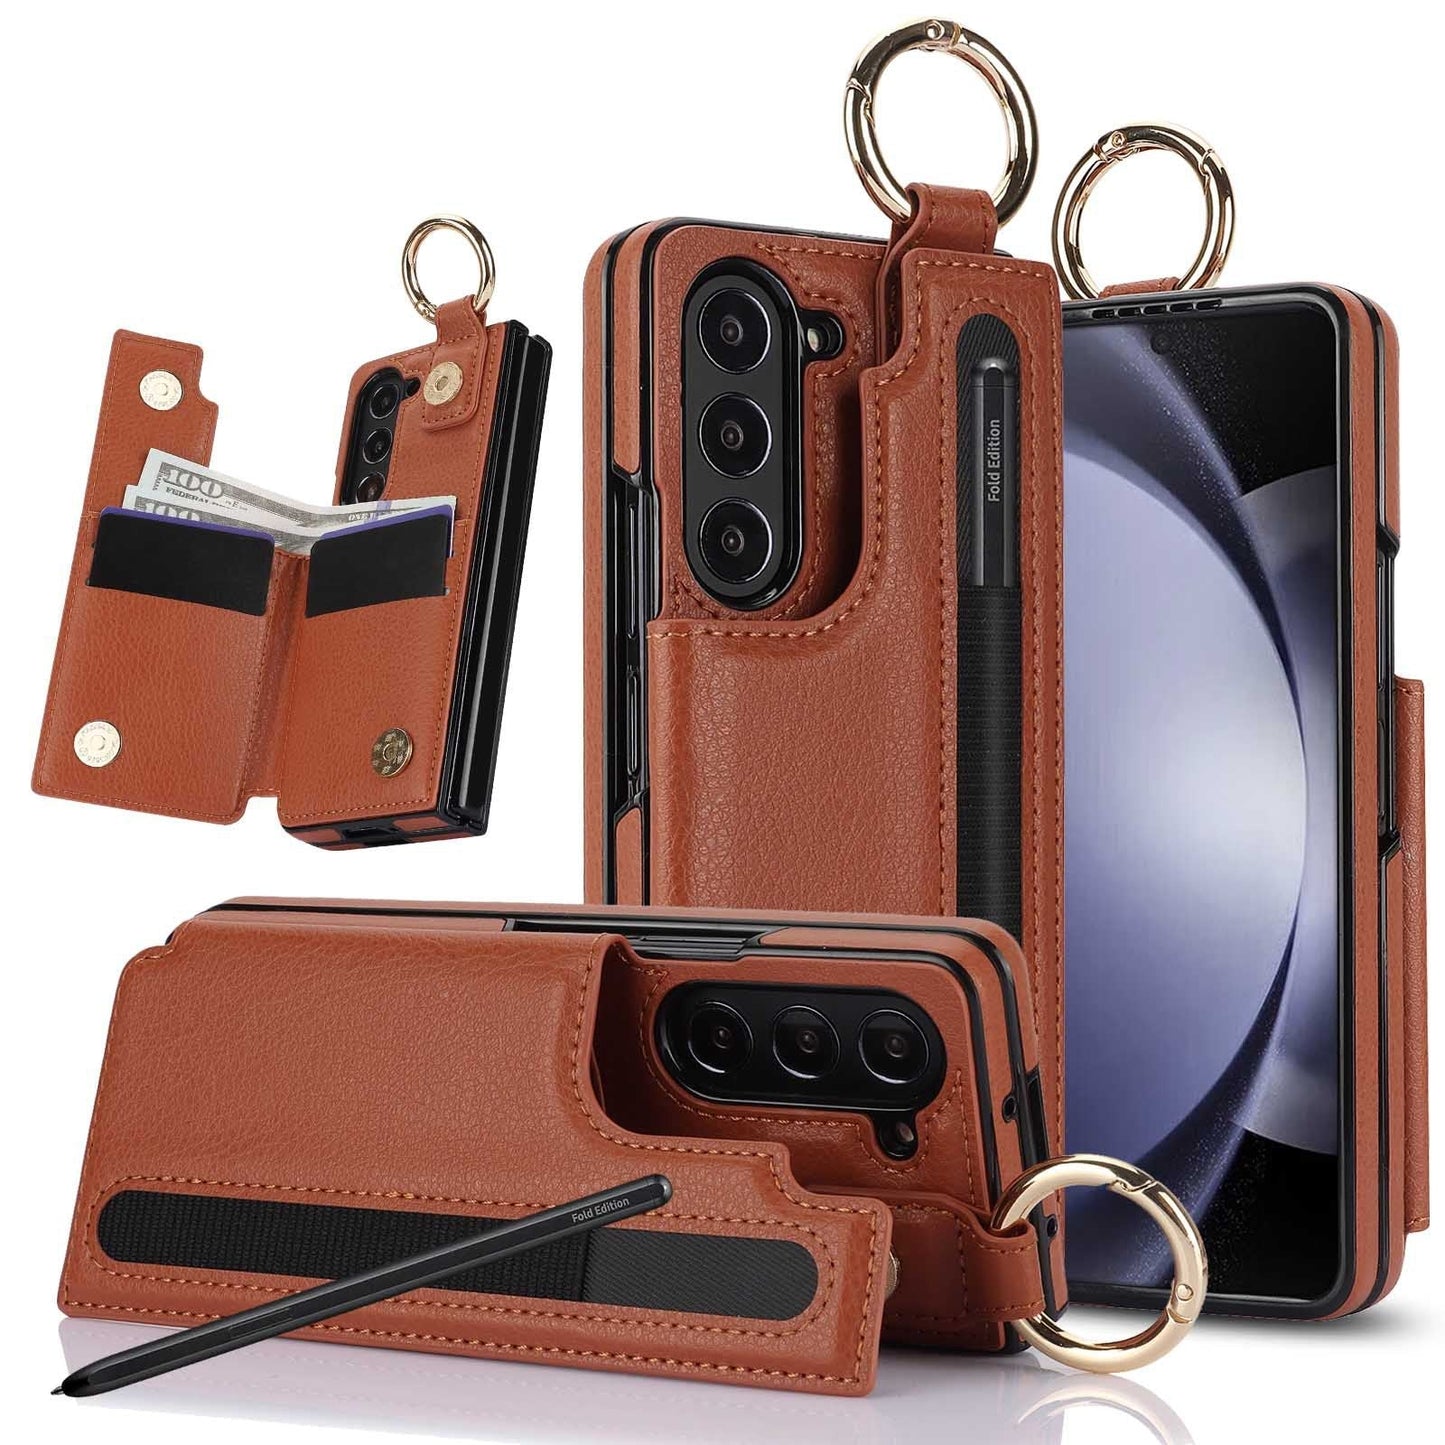 Casing ponsel Slot pena cincin dompet untuk Samsung ZFold3/4/5